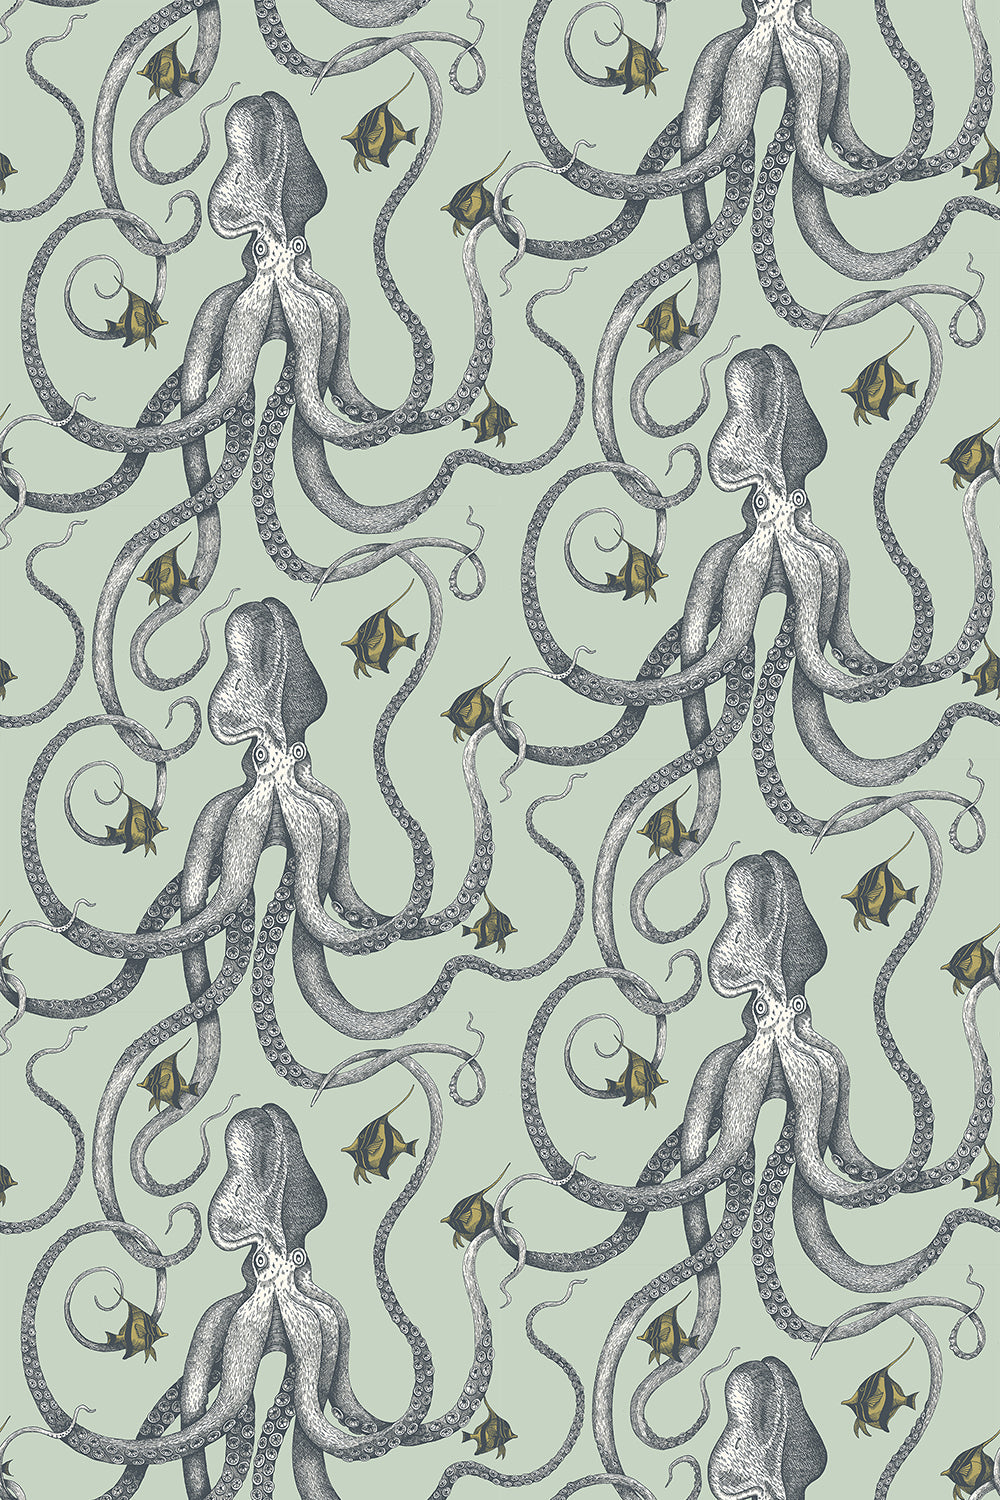 Josephine-Munsey-wallpaper-Radmoor-blue-Octopoda-soft-green-blue-background-repeating-illustrated-hand-drawn-octopus-angel-fish-pattern-sealife